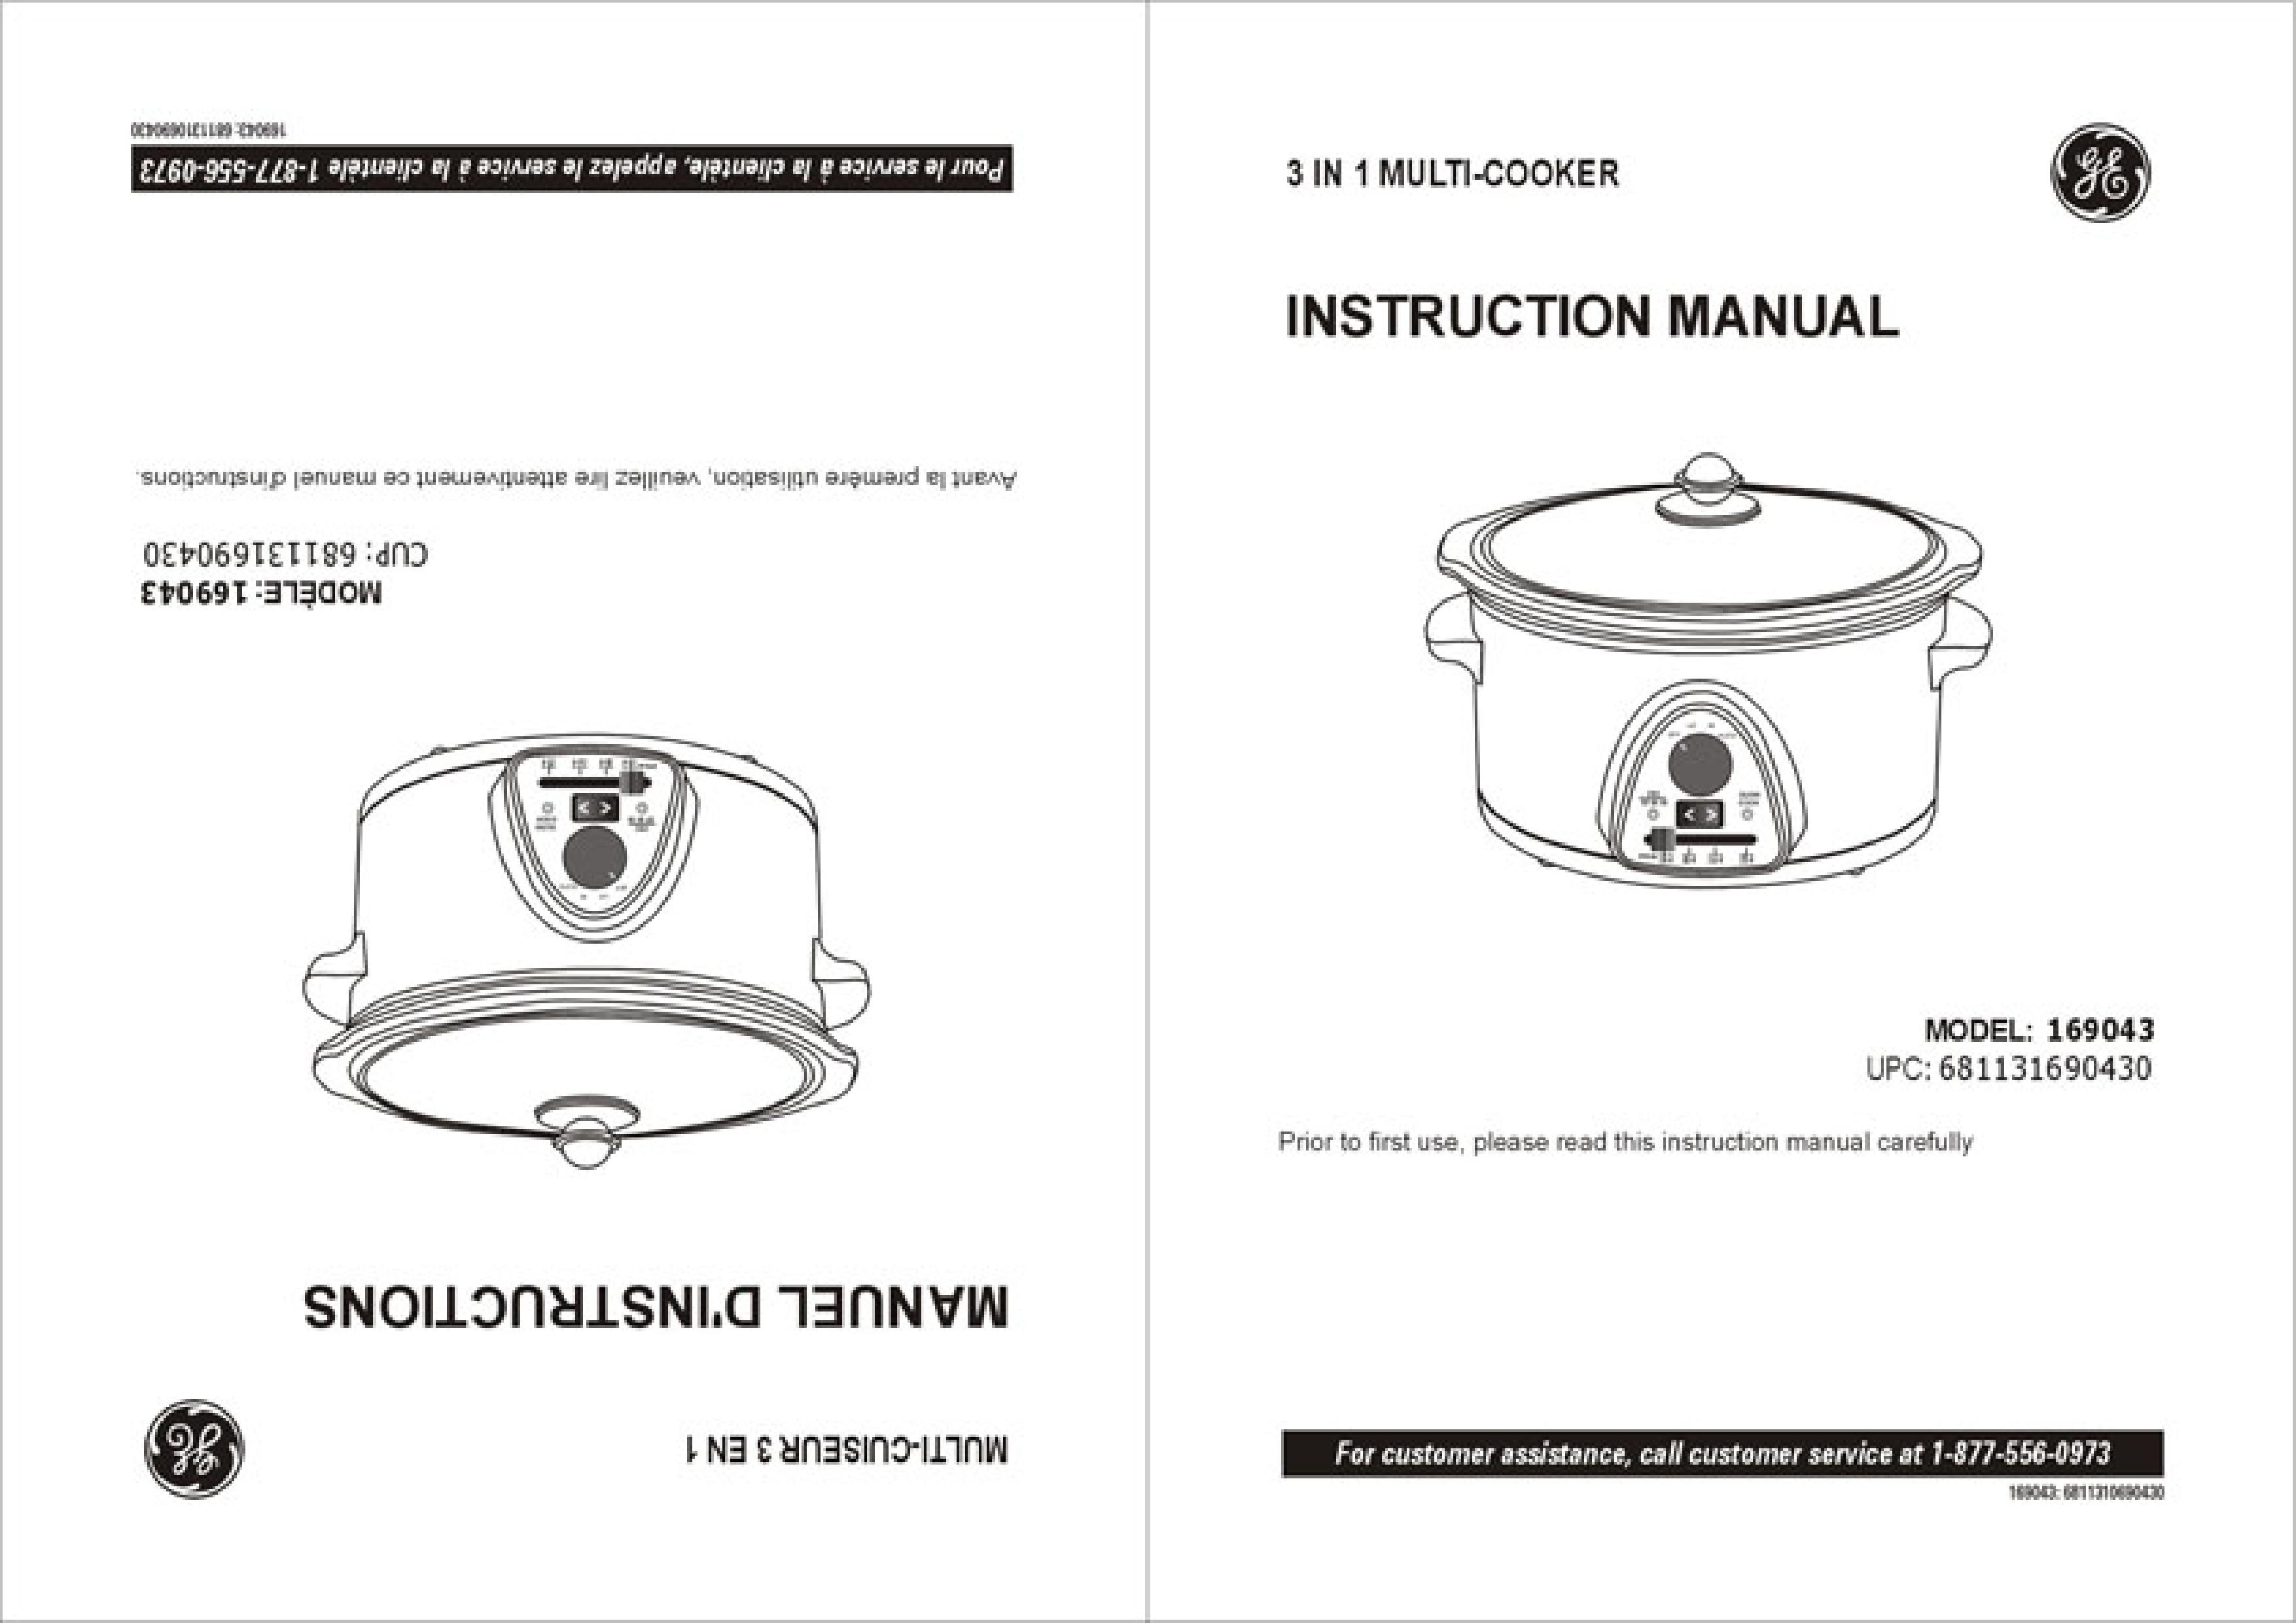 GE 169043 Slow Cooker User Manual